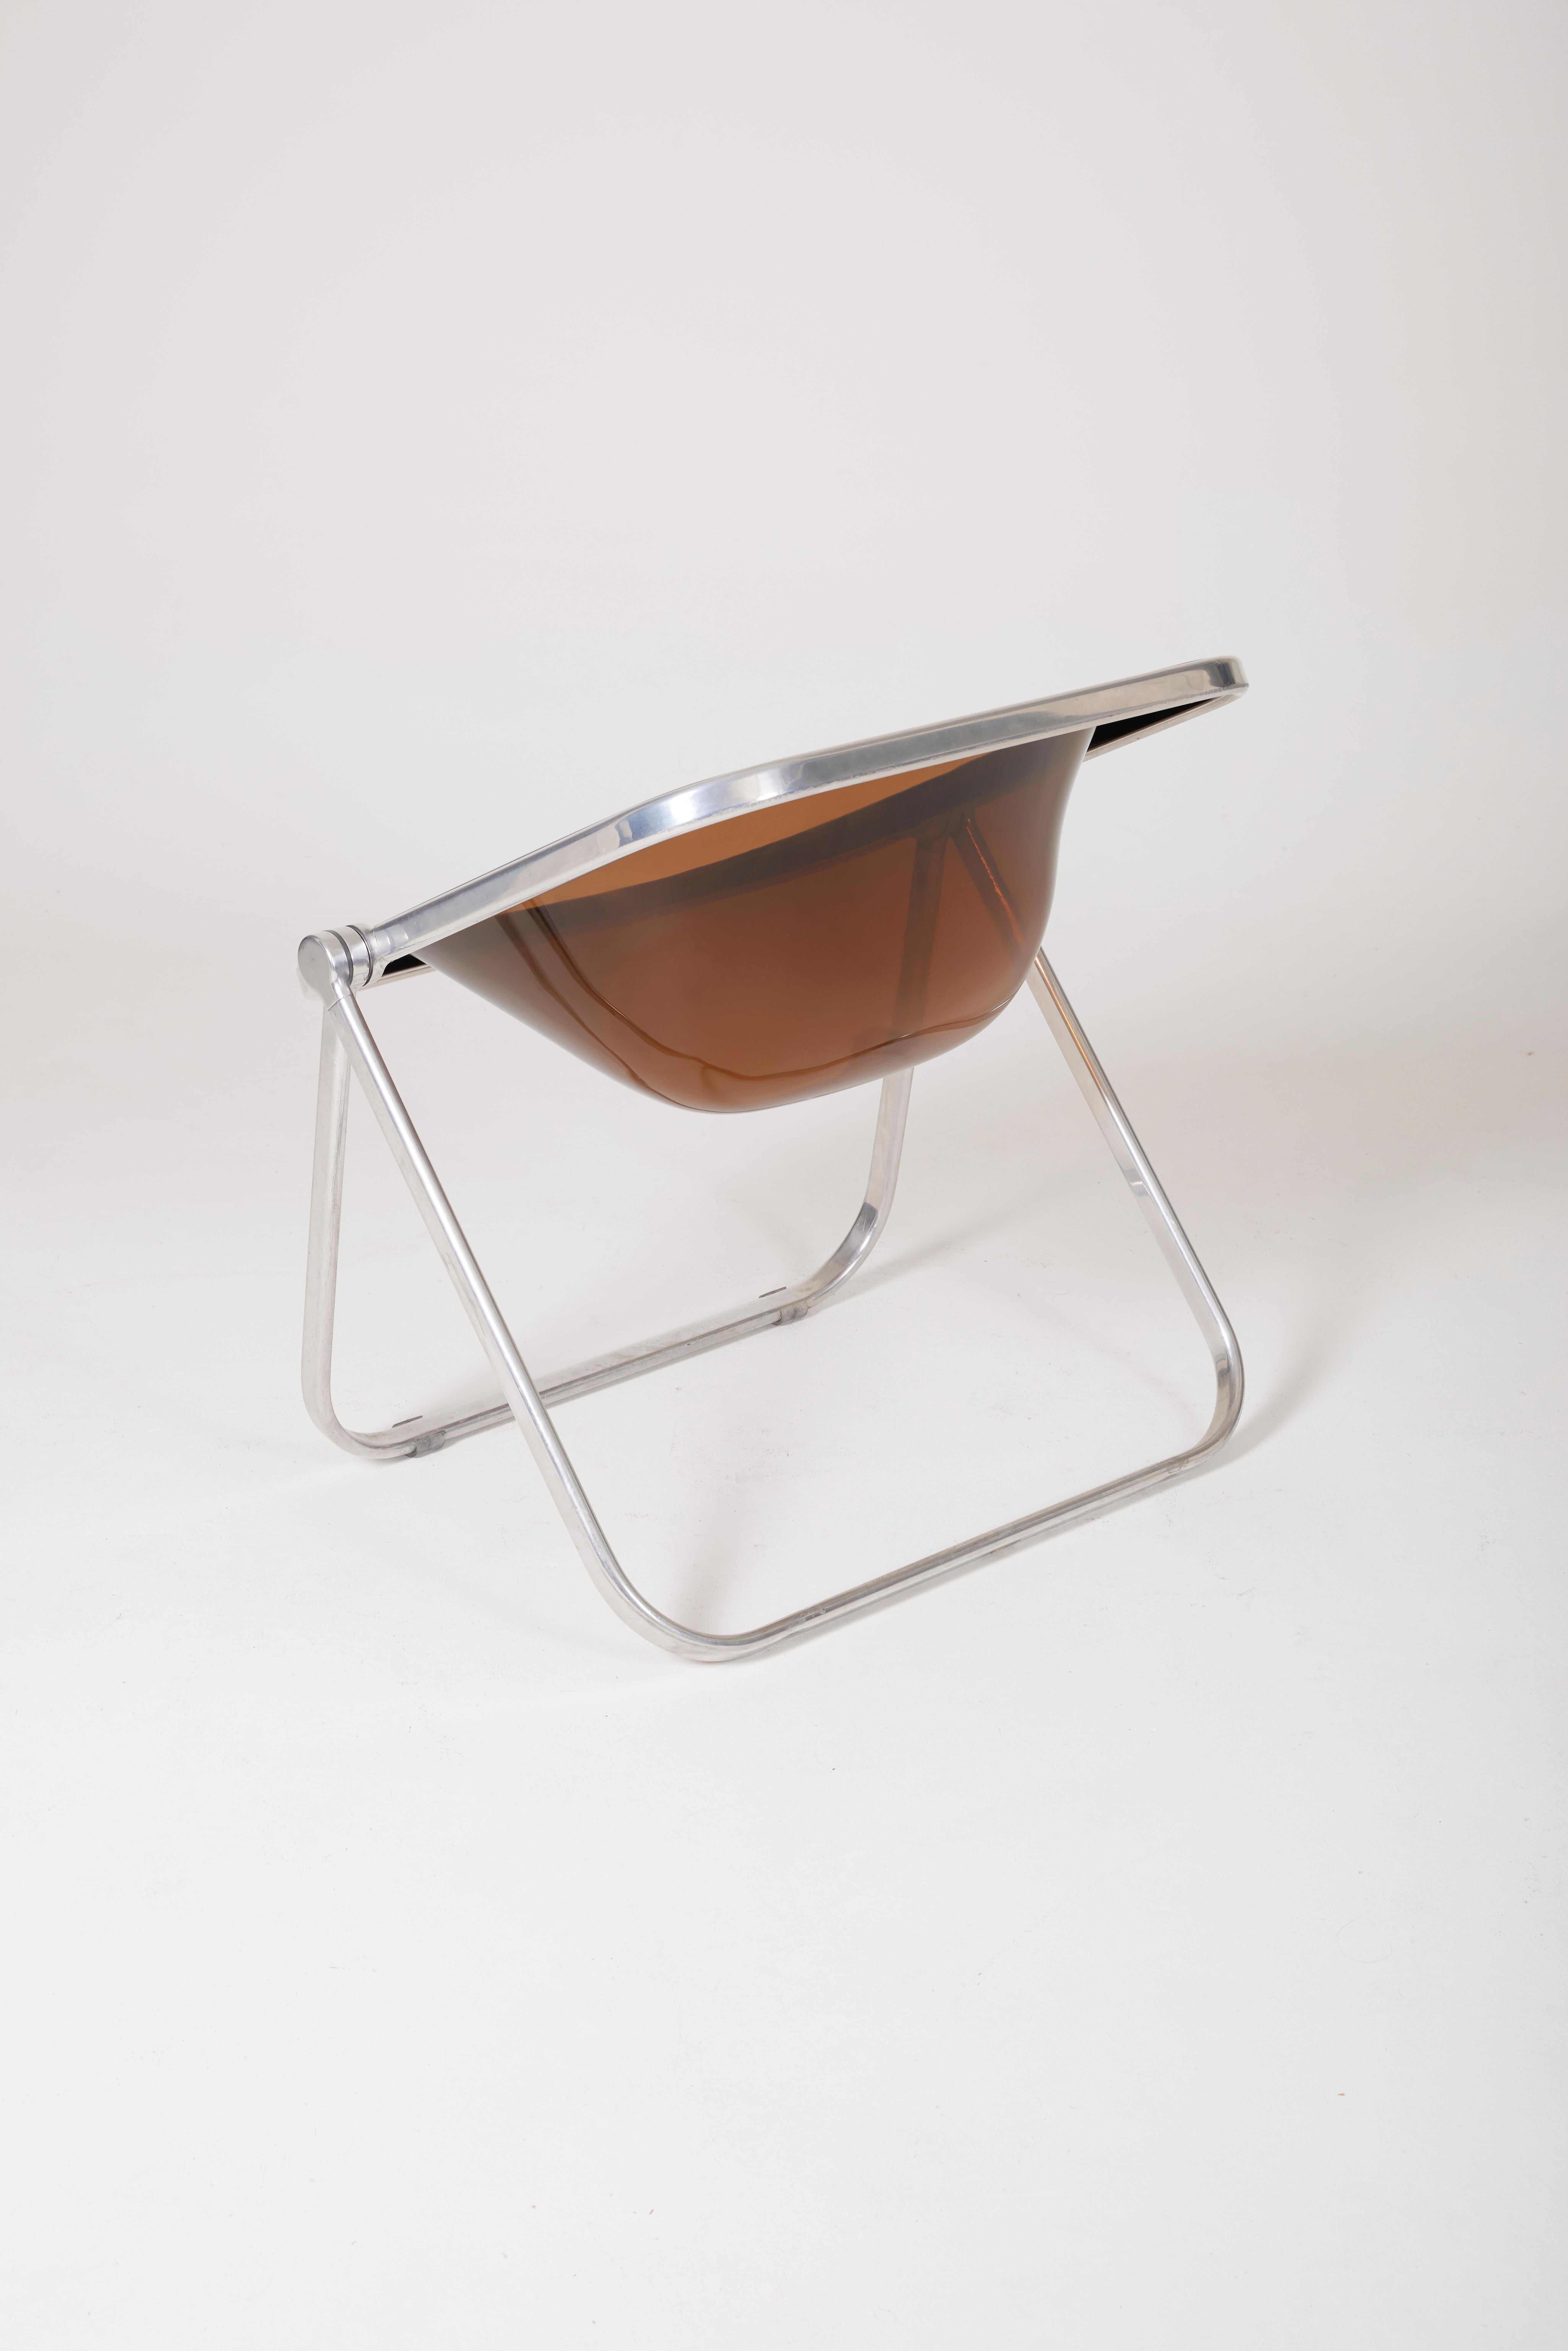 20th Century 'Plona' Plexiglass Armchair by Giancarlo Piretti